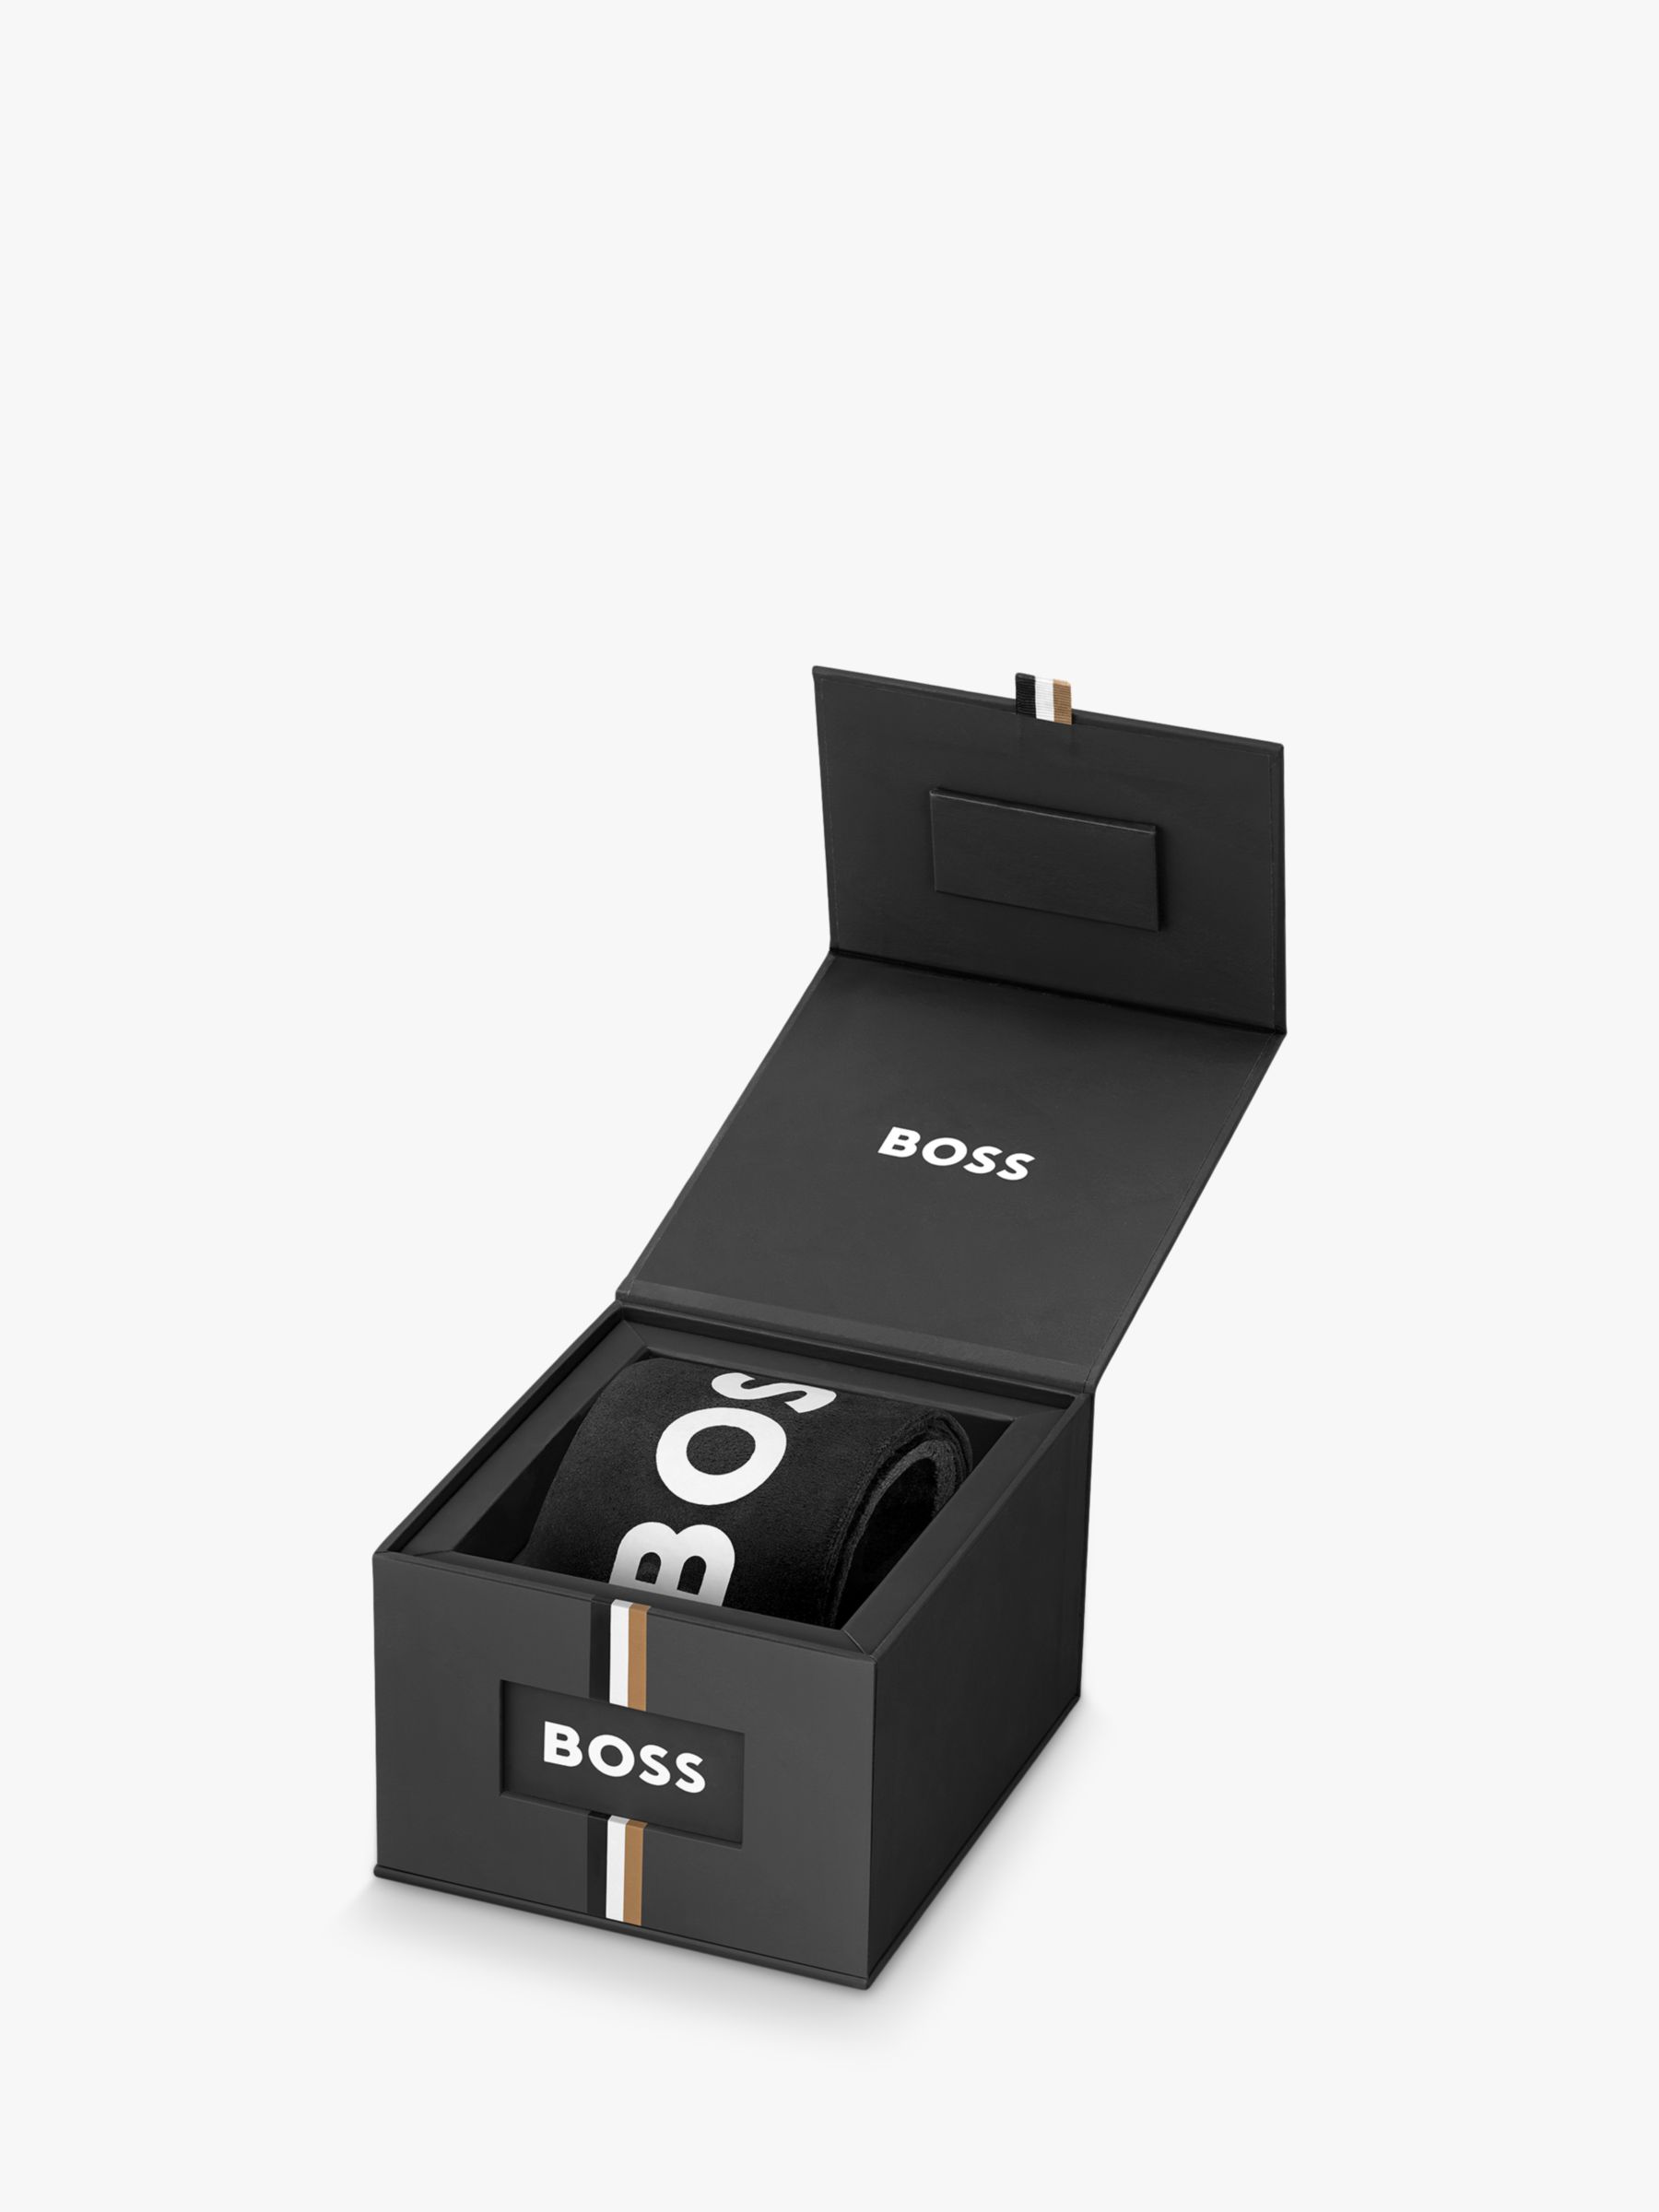 Buy HUGO BOSS Men's Runner Silicone Strap Watch Online at johnlewis.com